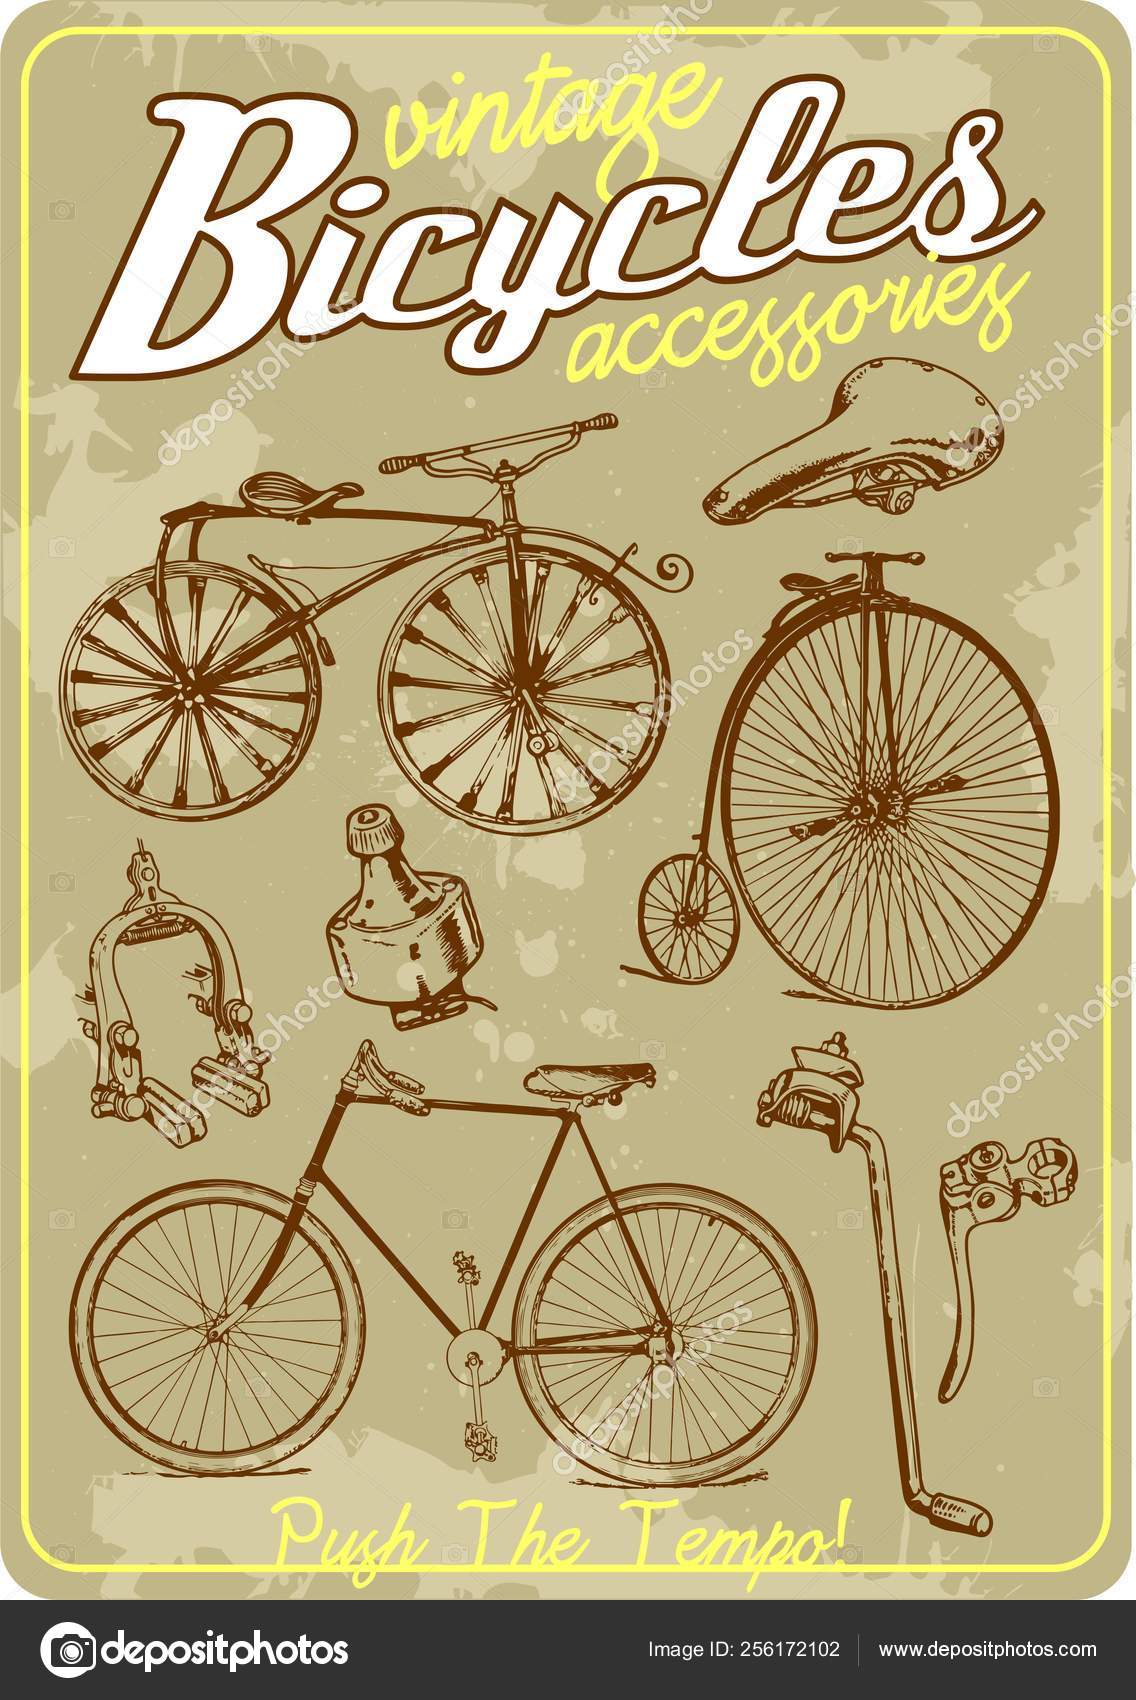 Conjunto de accesorios de bicicleta e ilustración de estilo de diseño plano  de bicicleta